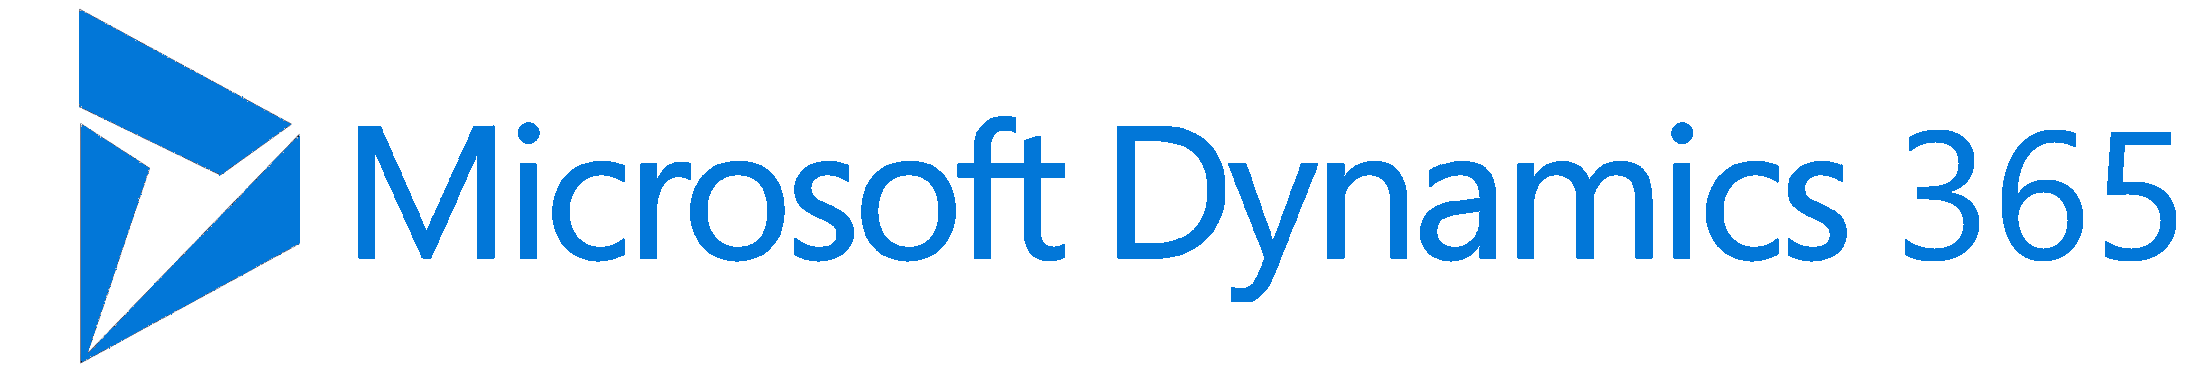 microsoft dynamics 365 download free